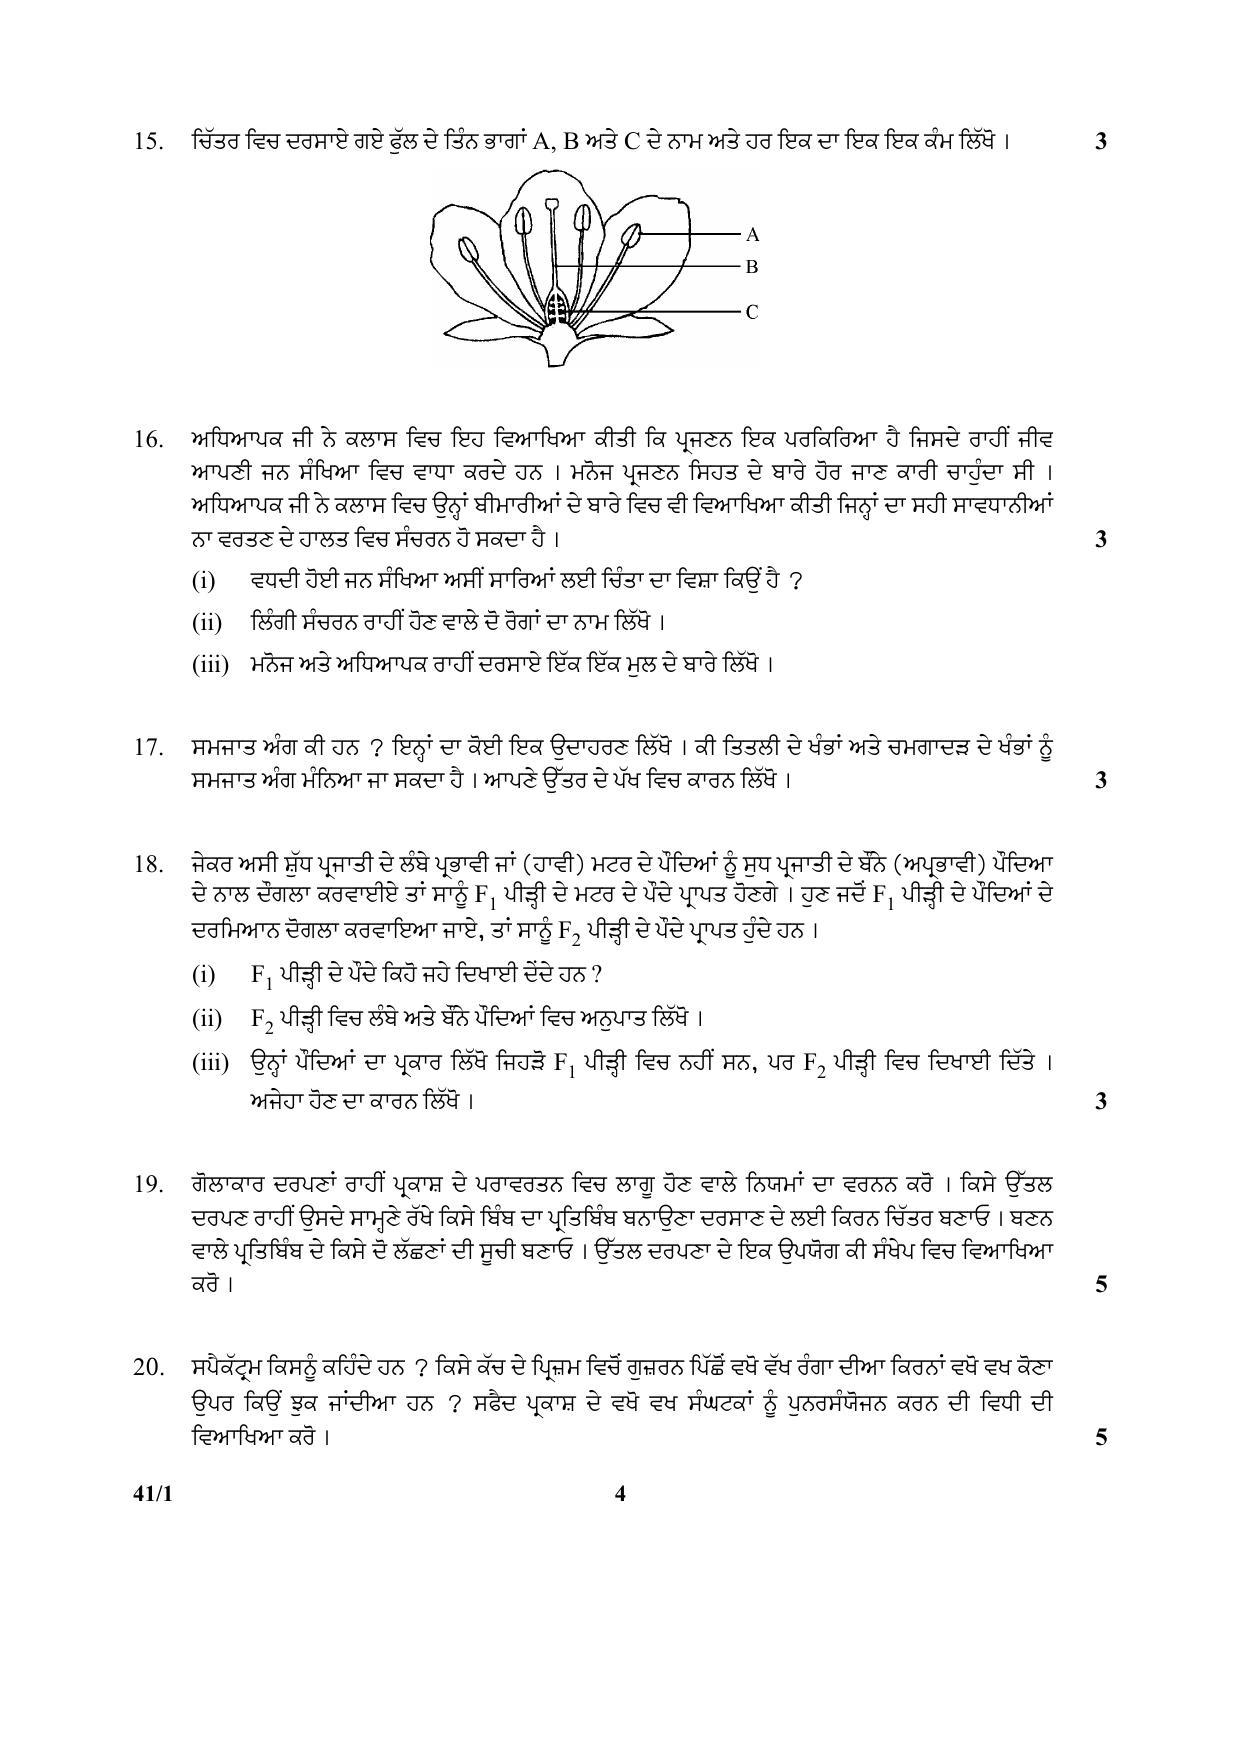 CBSE Class 10 41-1 (Science) Punjabi 2017-comptt Question Paper - Page 4